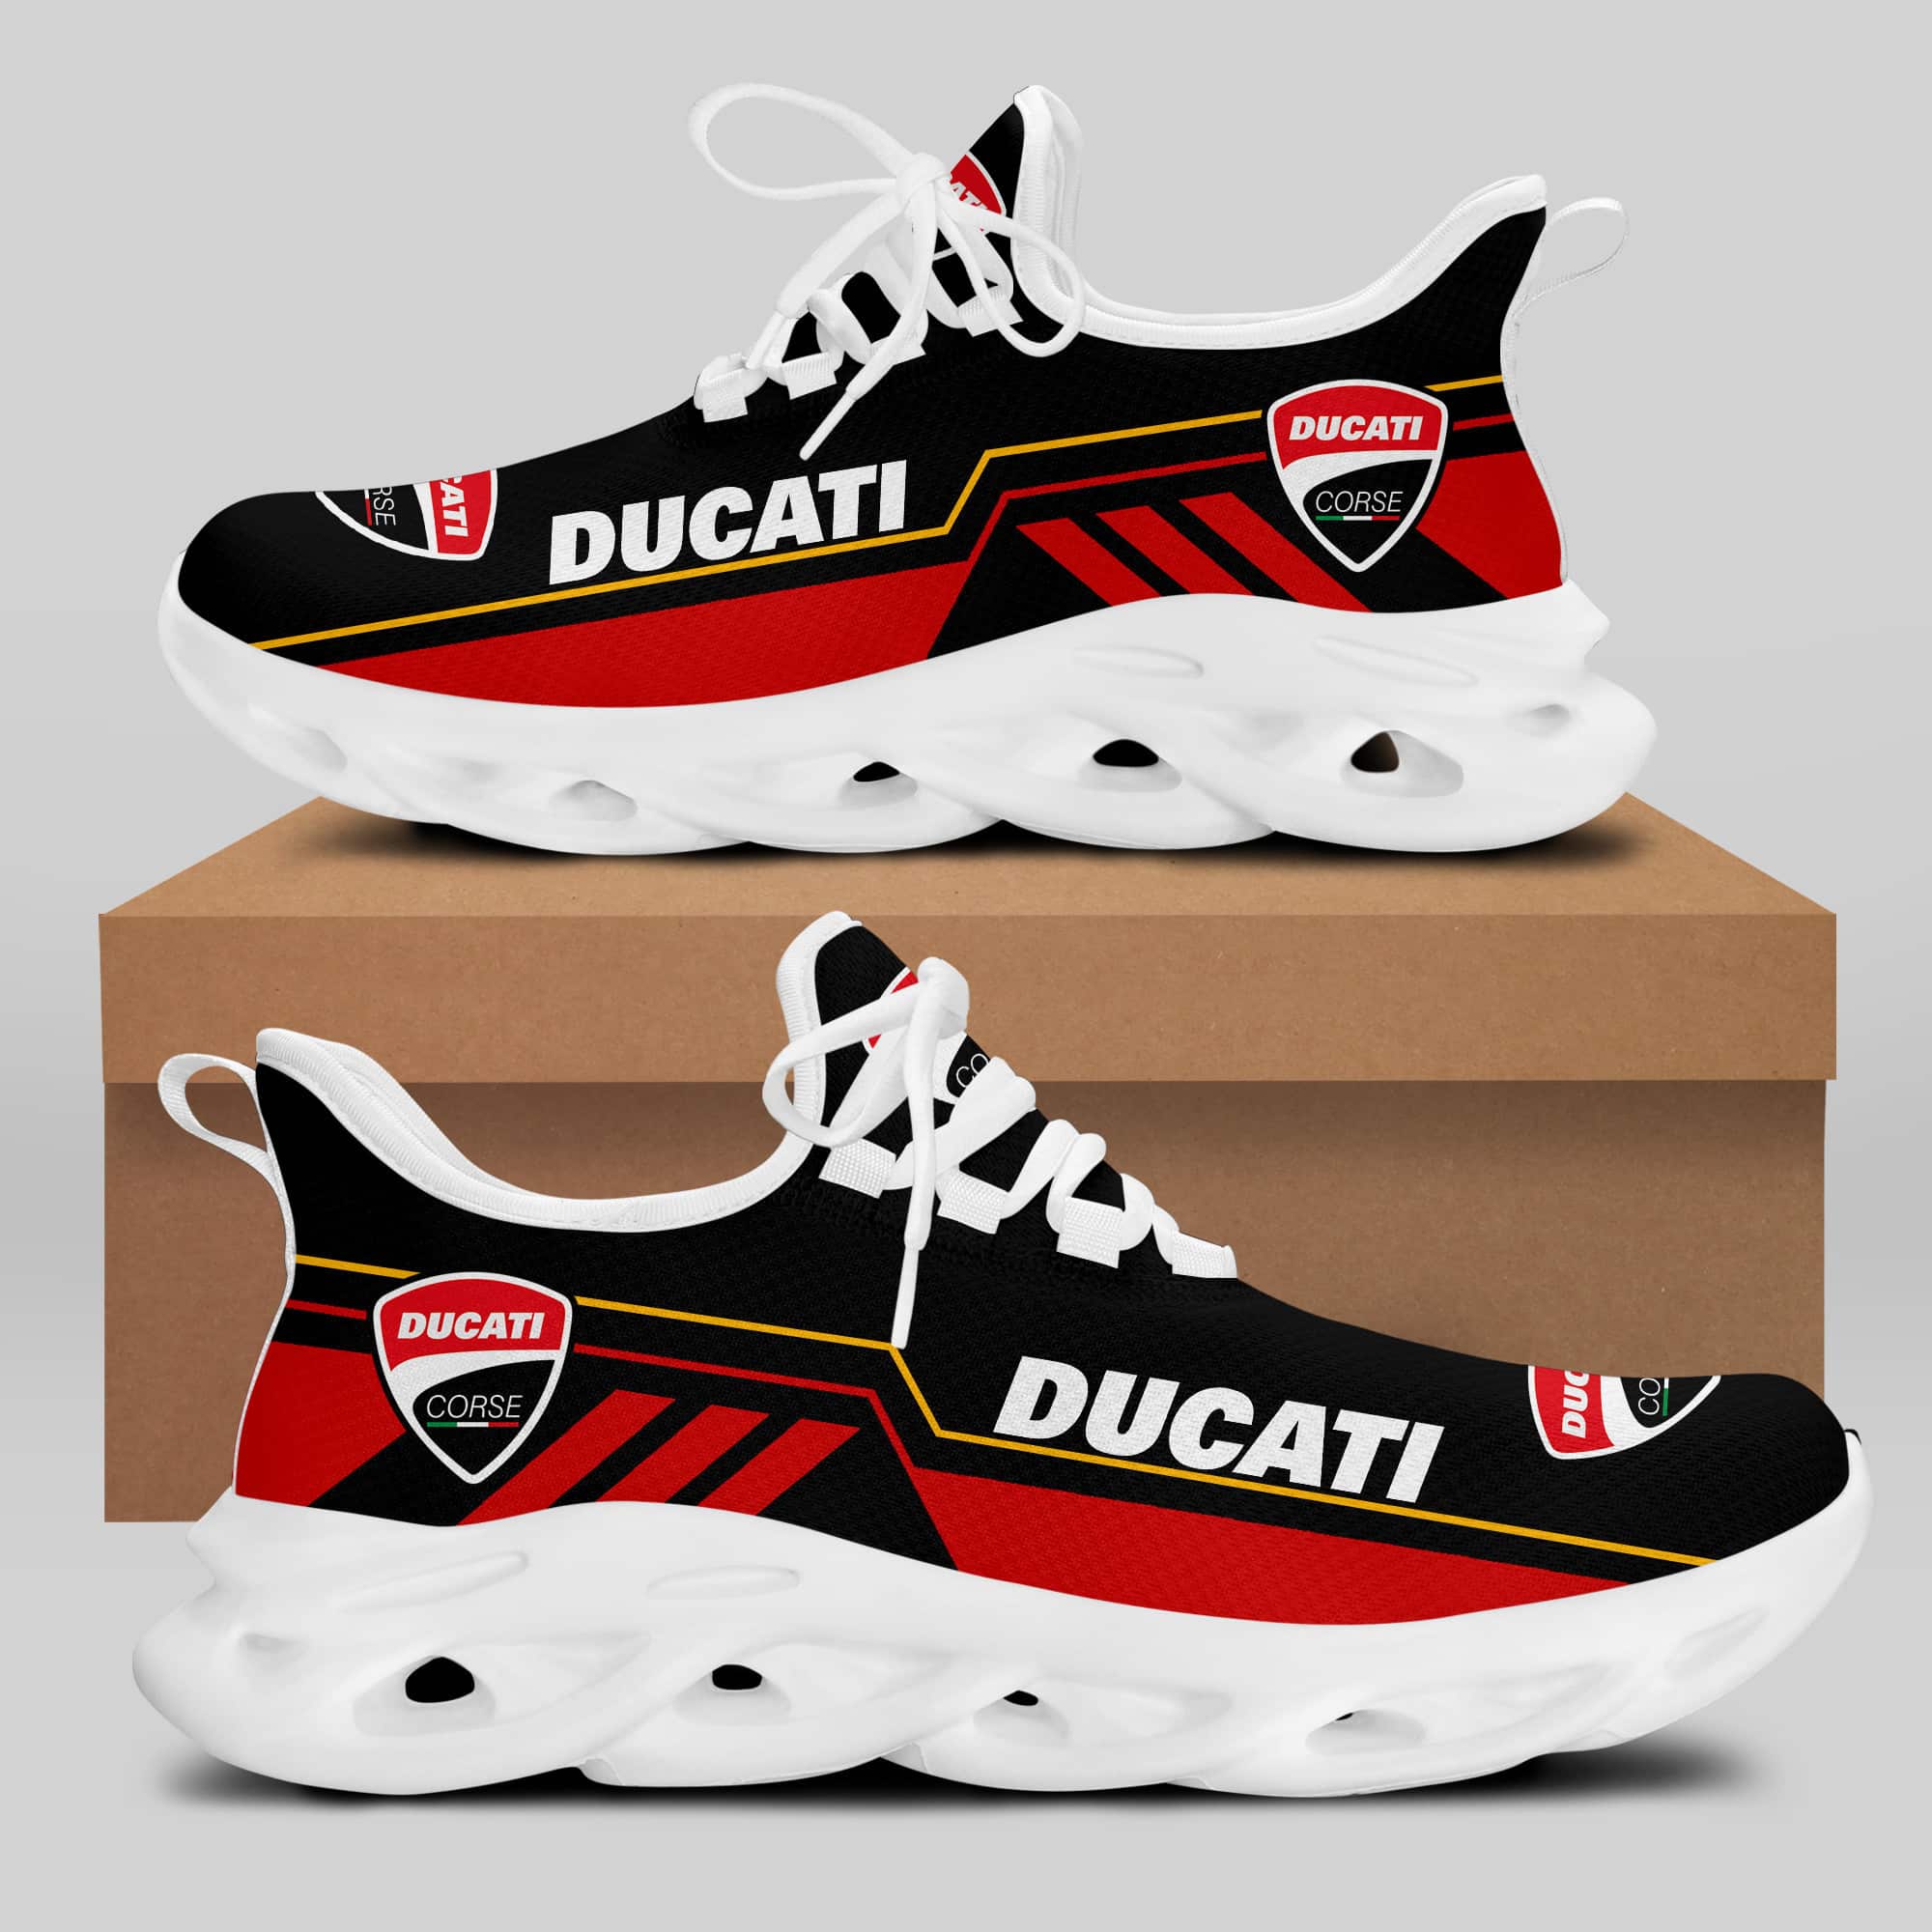 Ducati Racing Running Shoes Max Soul Shoes Sneakers Ver 19 2